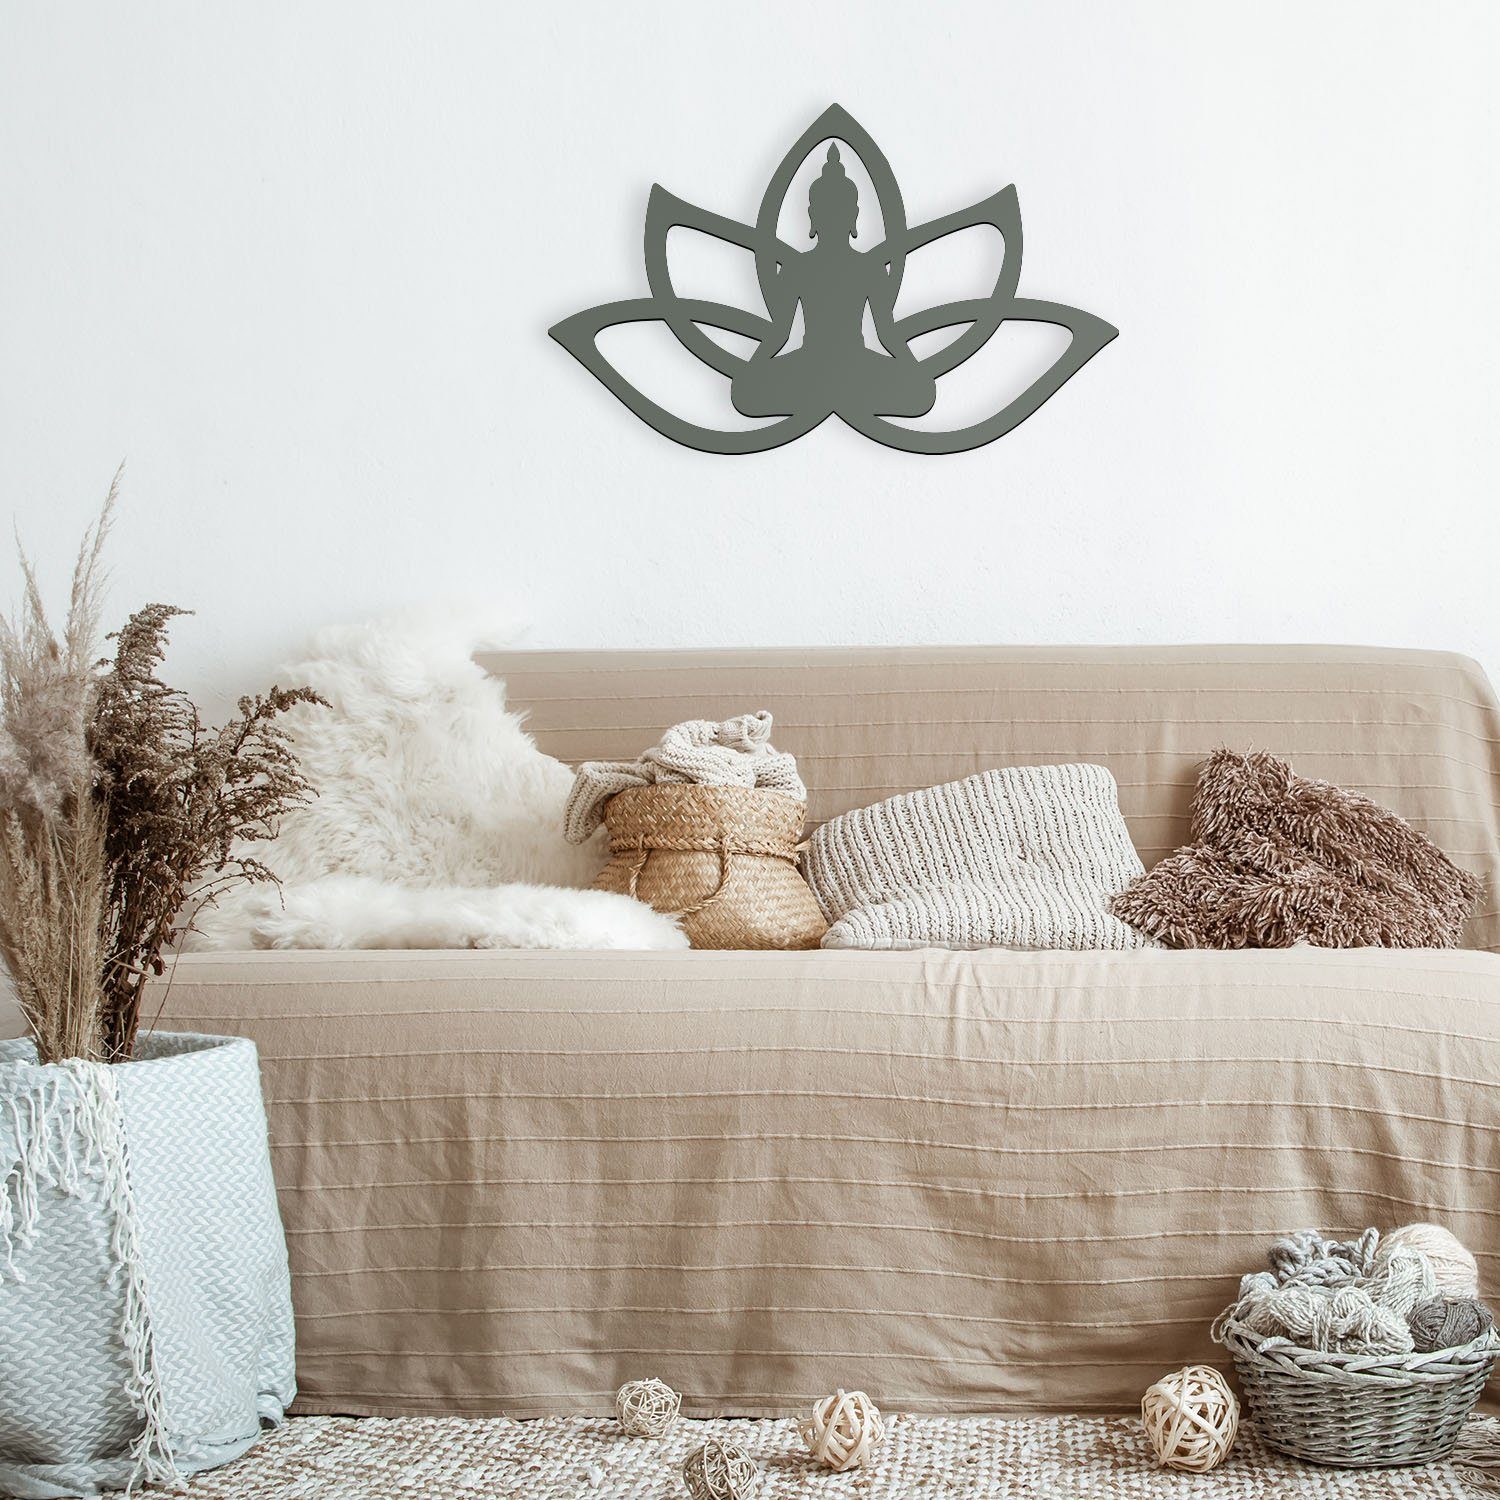 Namofactur LED Wandleuchte Haltung Lotus aus Farbwechsler LED fest Blume, Schwarz Holz, RGB integriert, Buddha Wandlampe Meditation Yoga